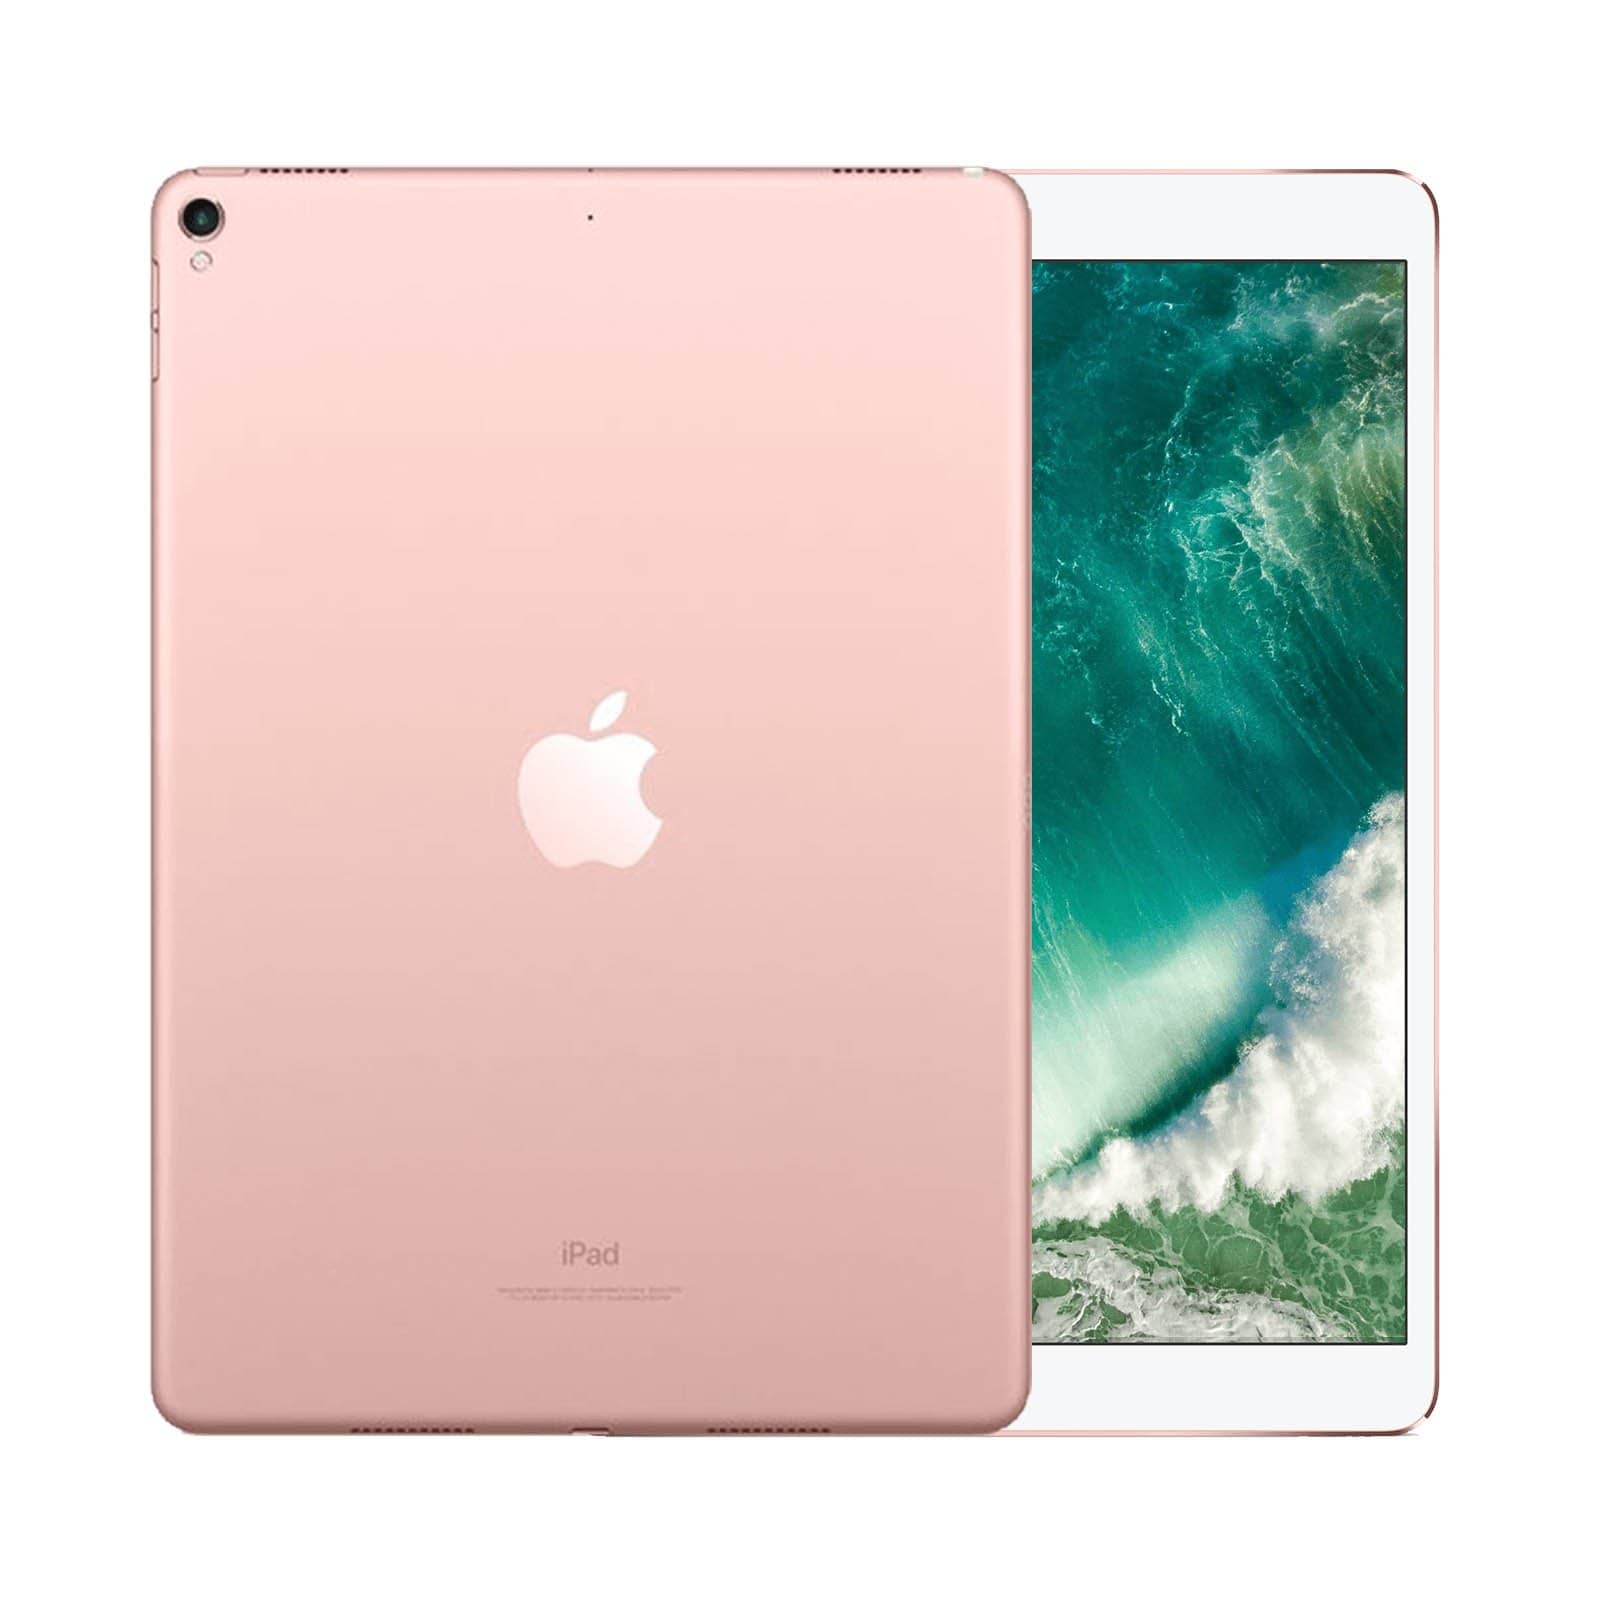 iPad Pro 10.5 Inch 256GB Rose Gold Very Good - WiFi 256GB Rose Gold Very Good